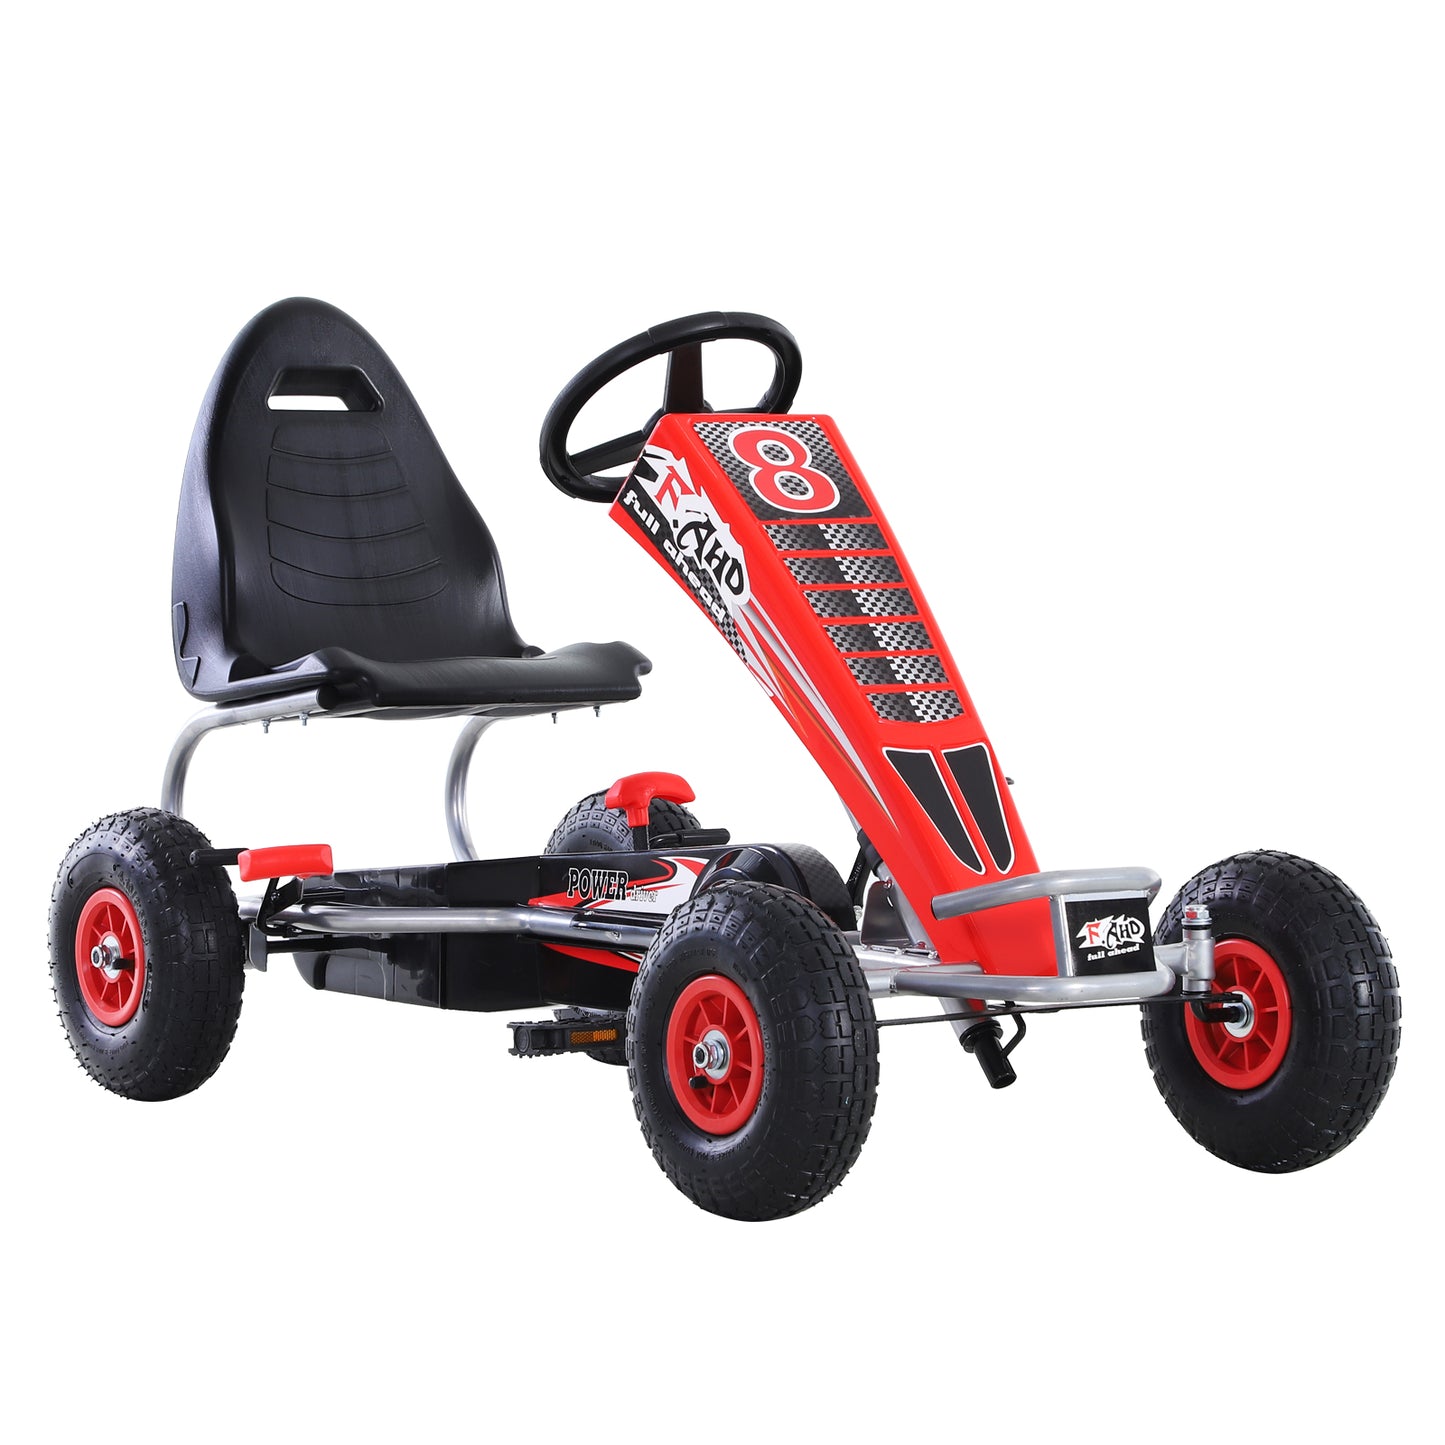 HOMCOM Pedal Go Kart Ride on Car Racing Style w/ Adjustable Seat Handbrake & Clutch in Red